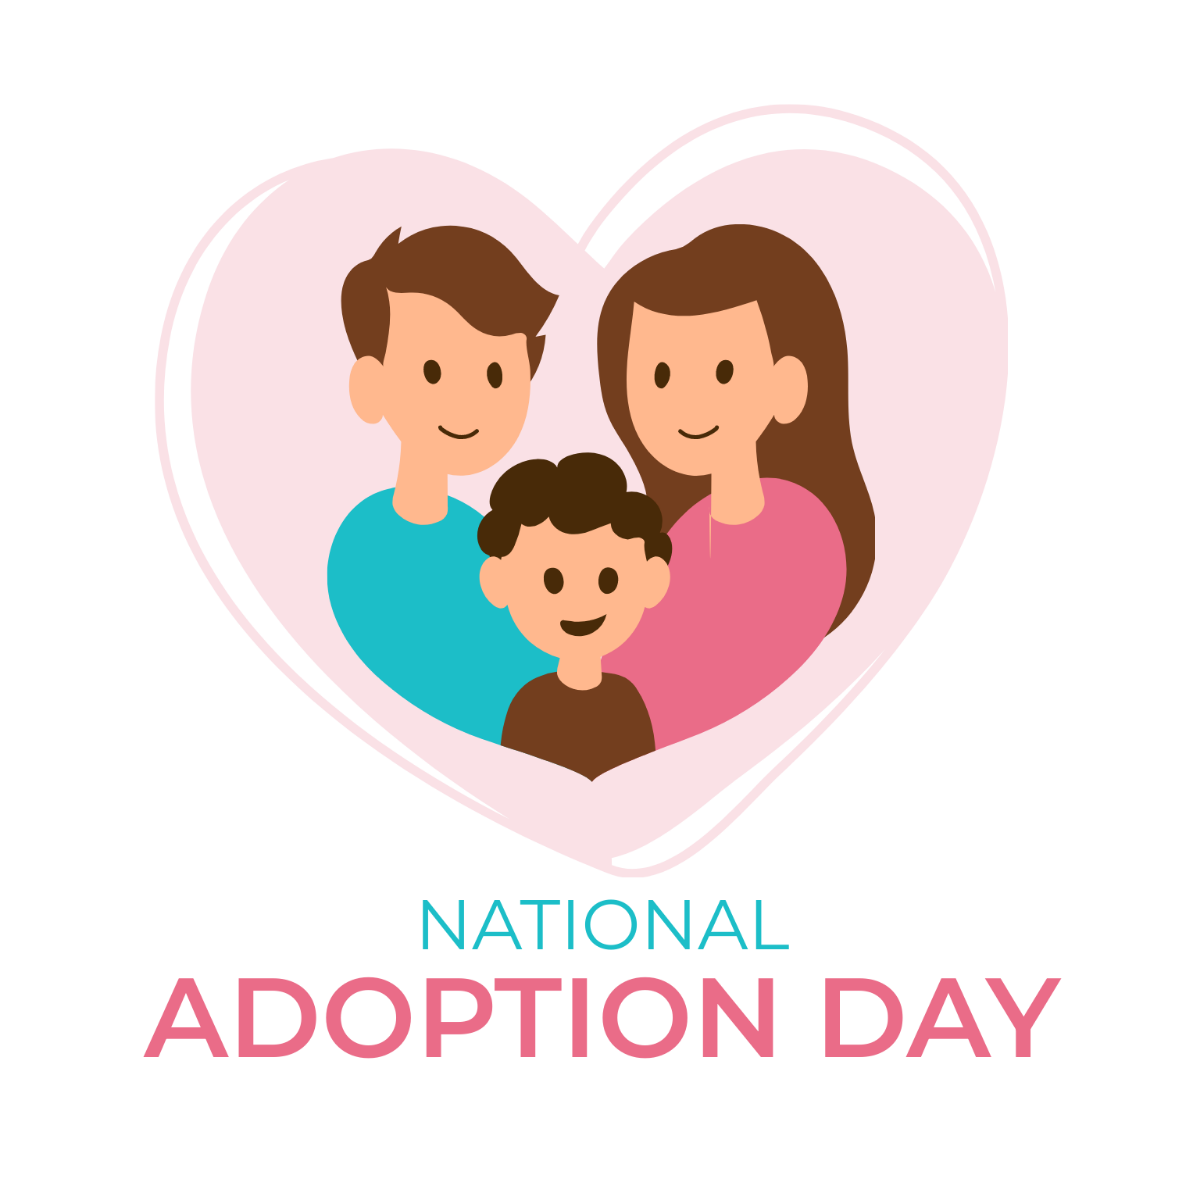 National Adoption Day Illustration Template